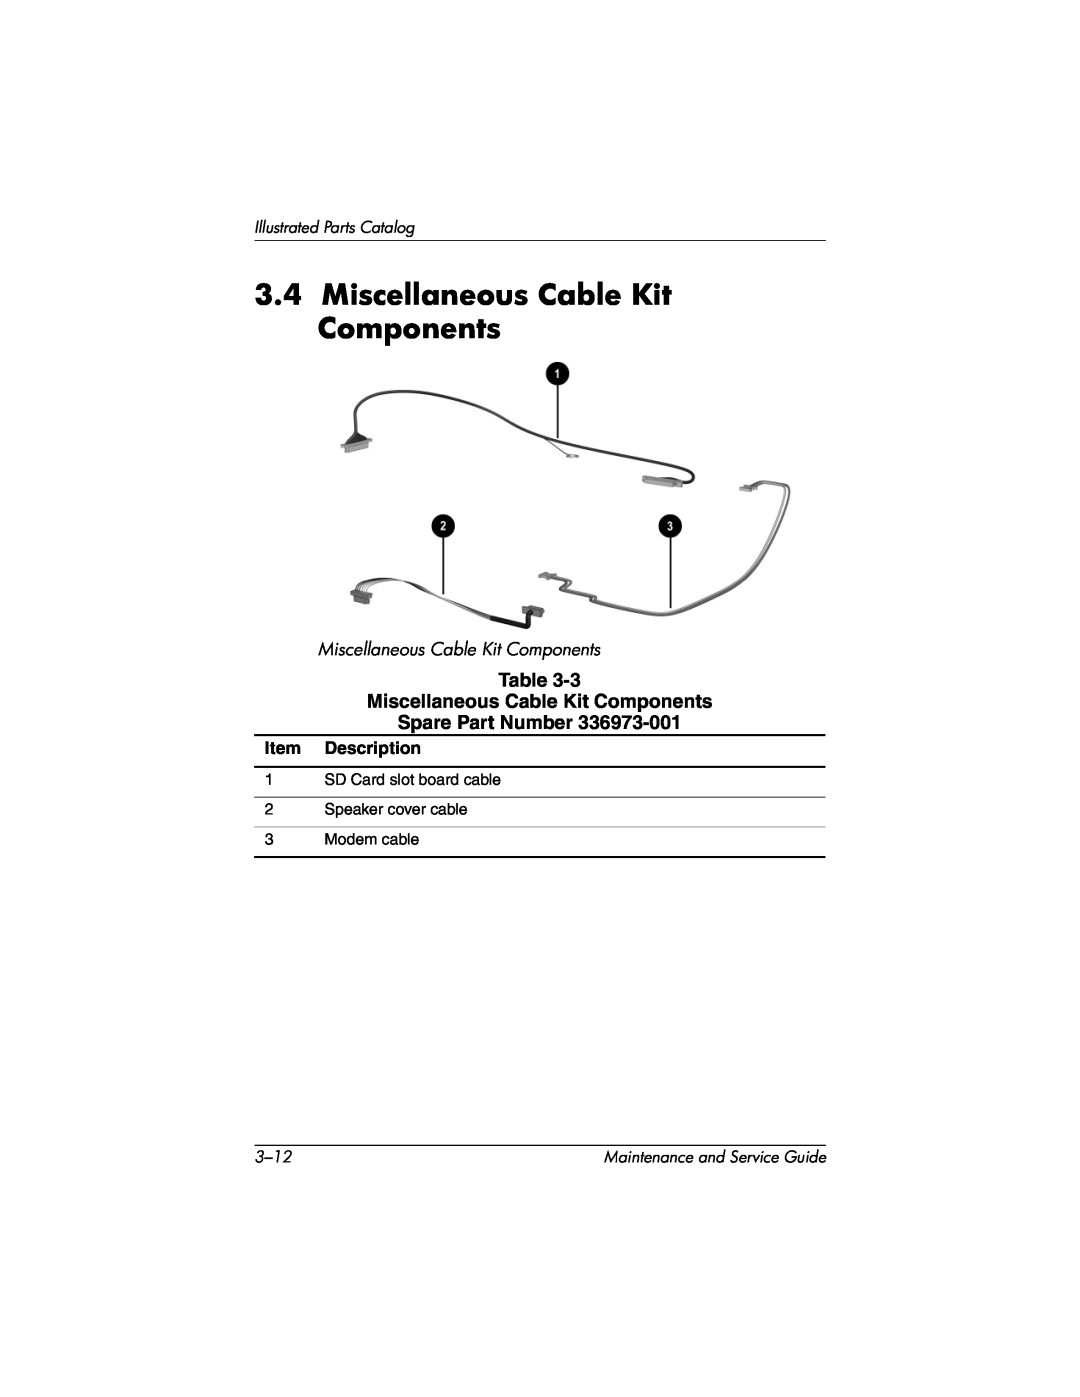 HP X1000, nx7000 manual Miscellaneous Cable Kit Components, Item Description, Illustrated Parts Catalog, 3-12 